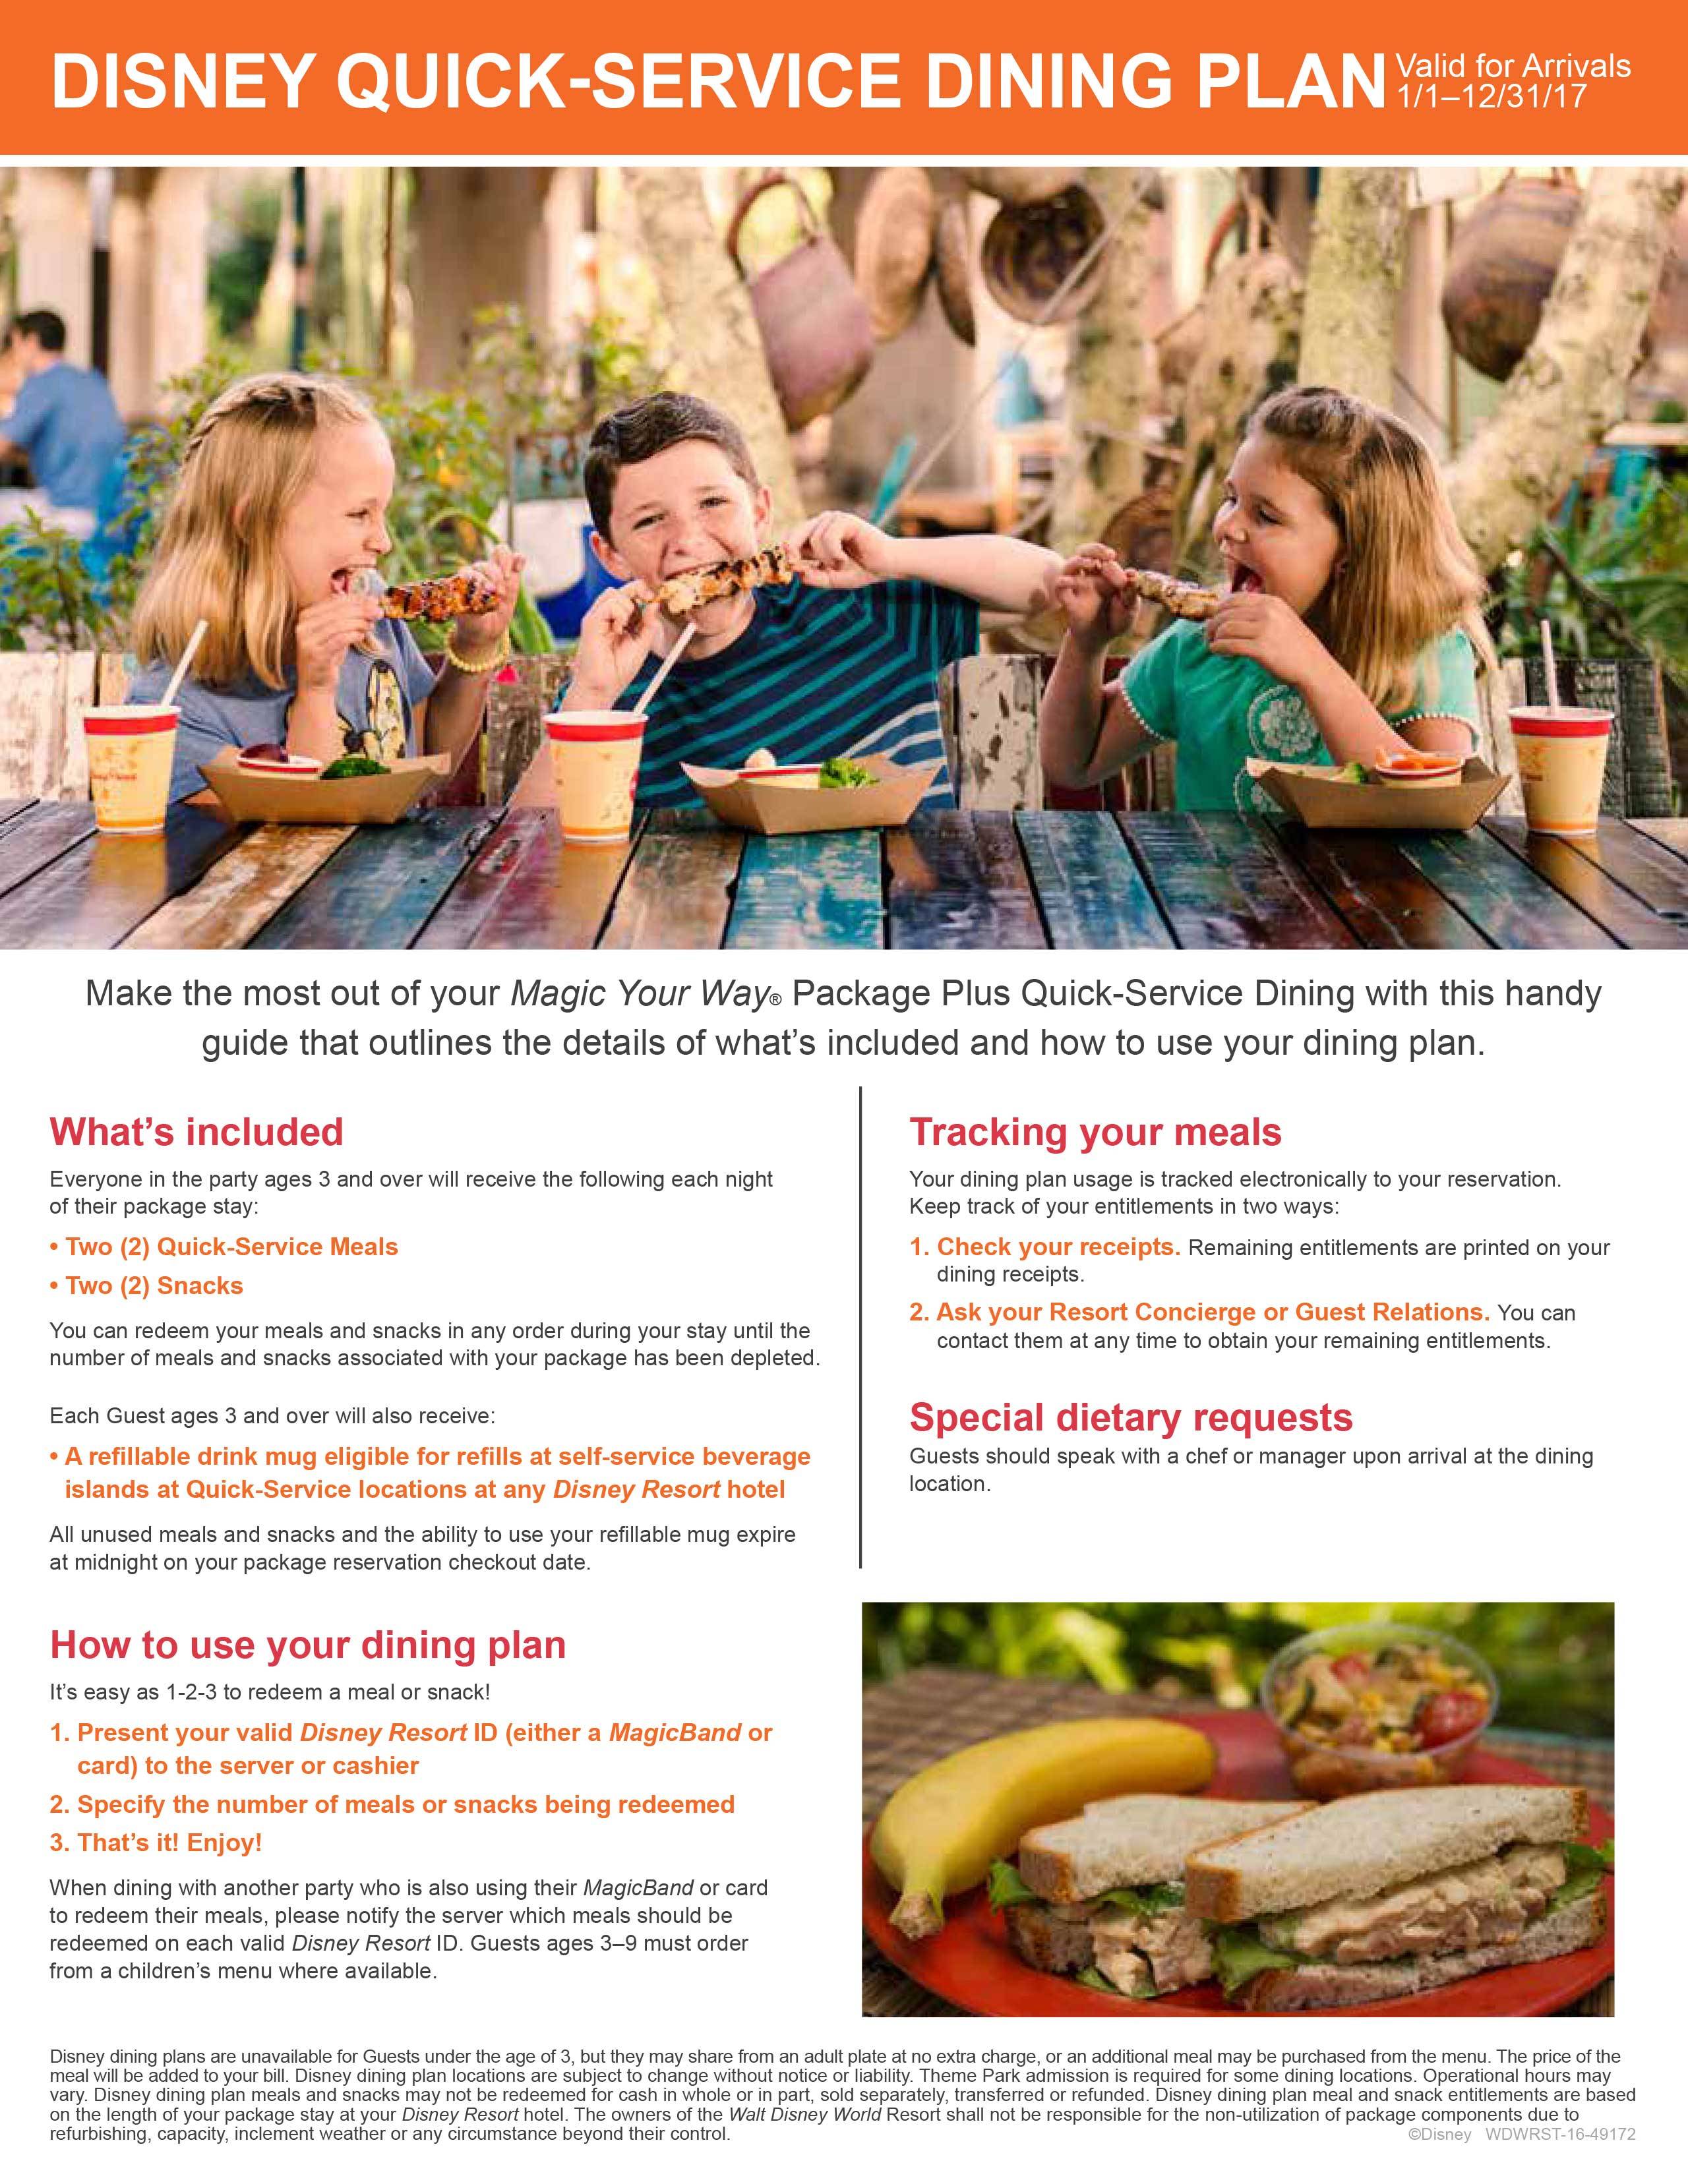 2017 Disney Dining Plan brochures